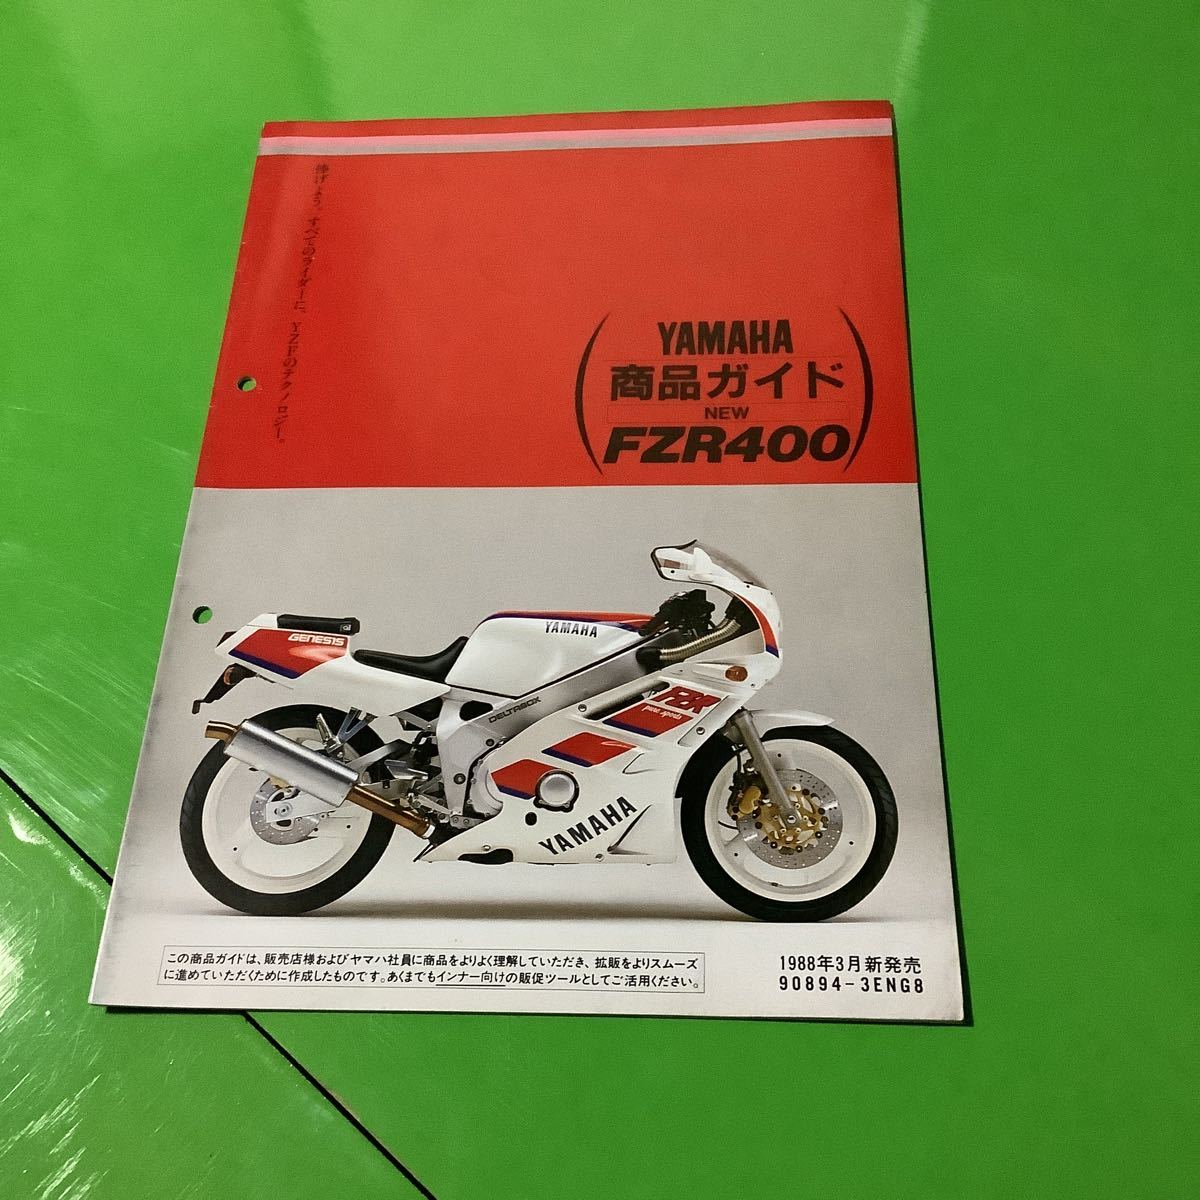 YAMAHA FZR400 商品ガイド サービスガイド バイク 雑誌 限定 商品ガイド New FZR400_画像1